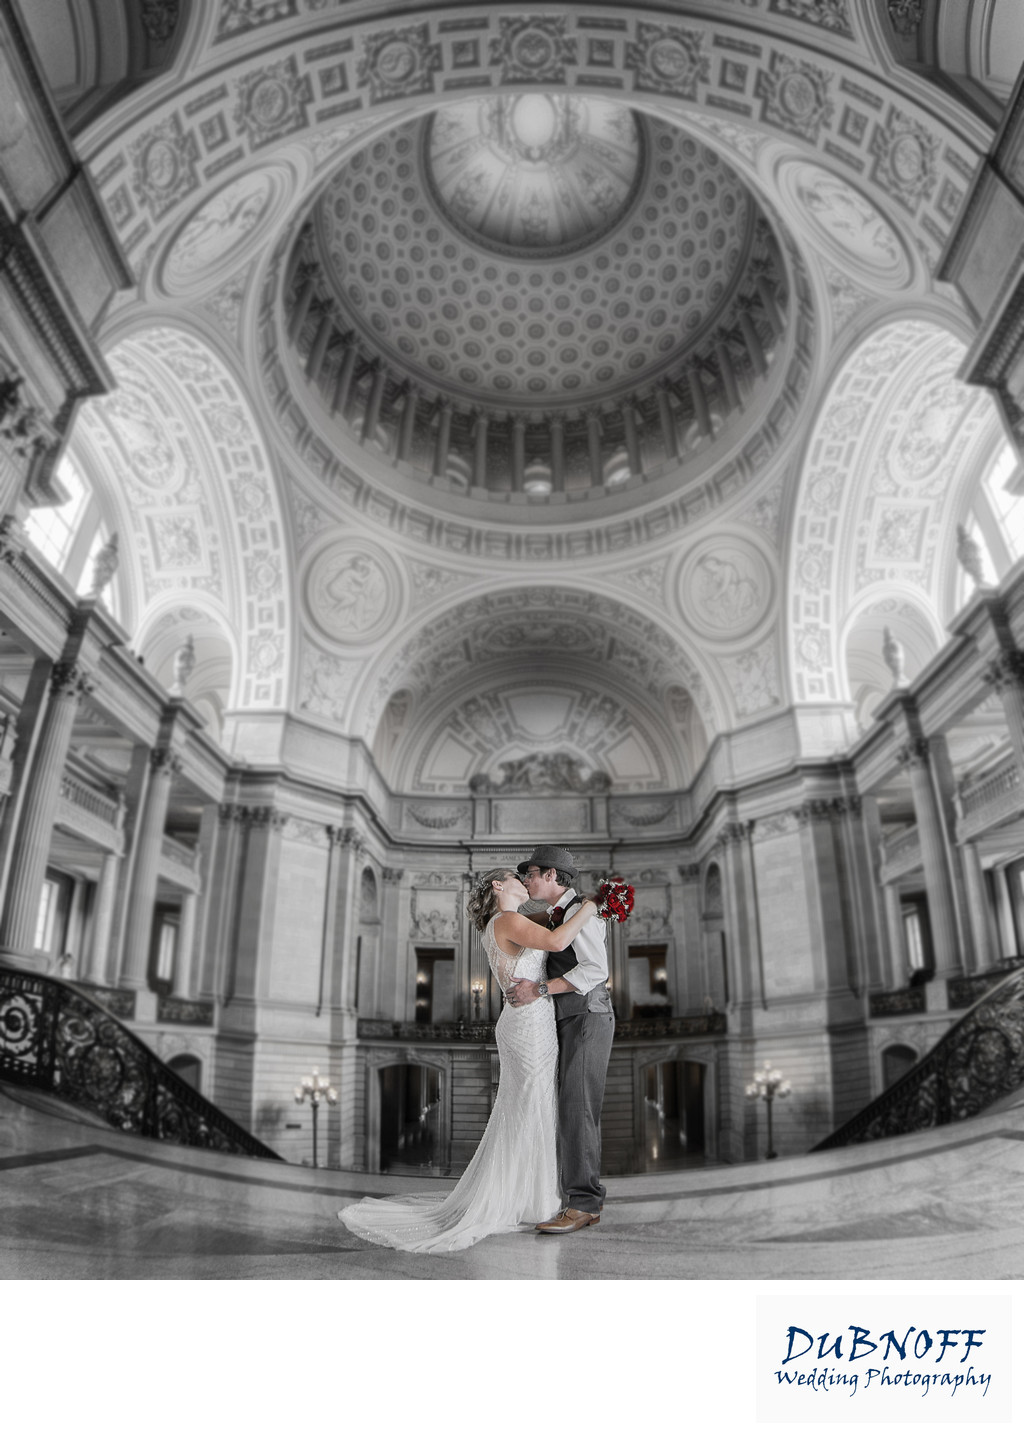 San Francisco city hall Marriage in Black and White - Rotunda